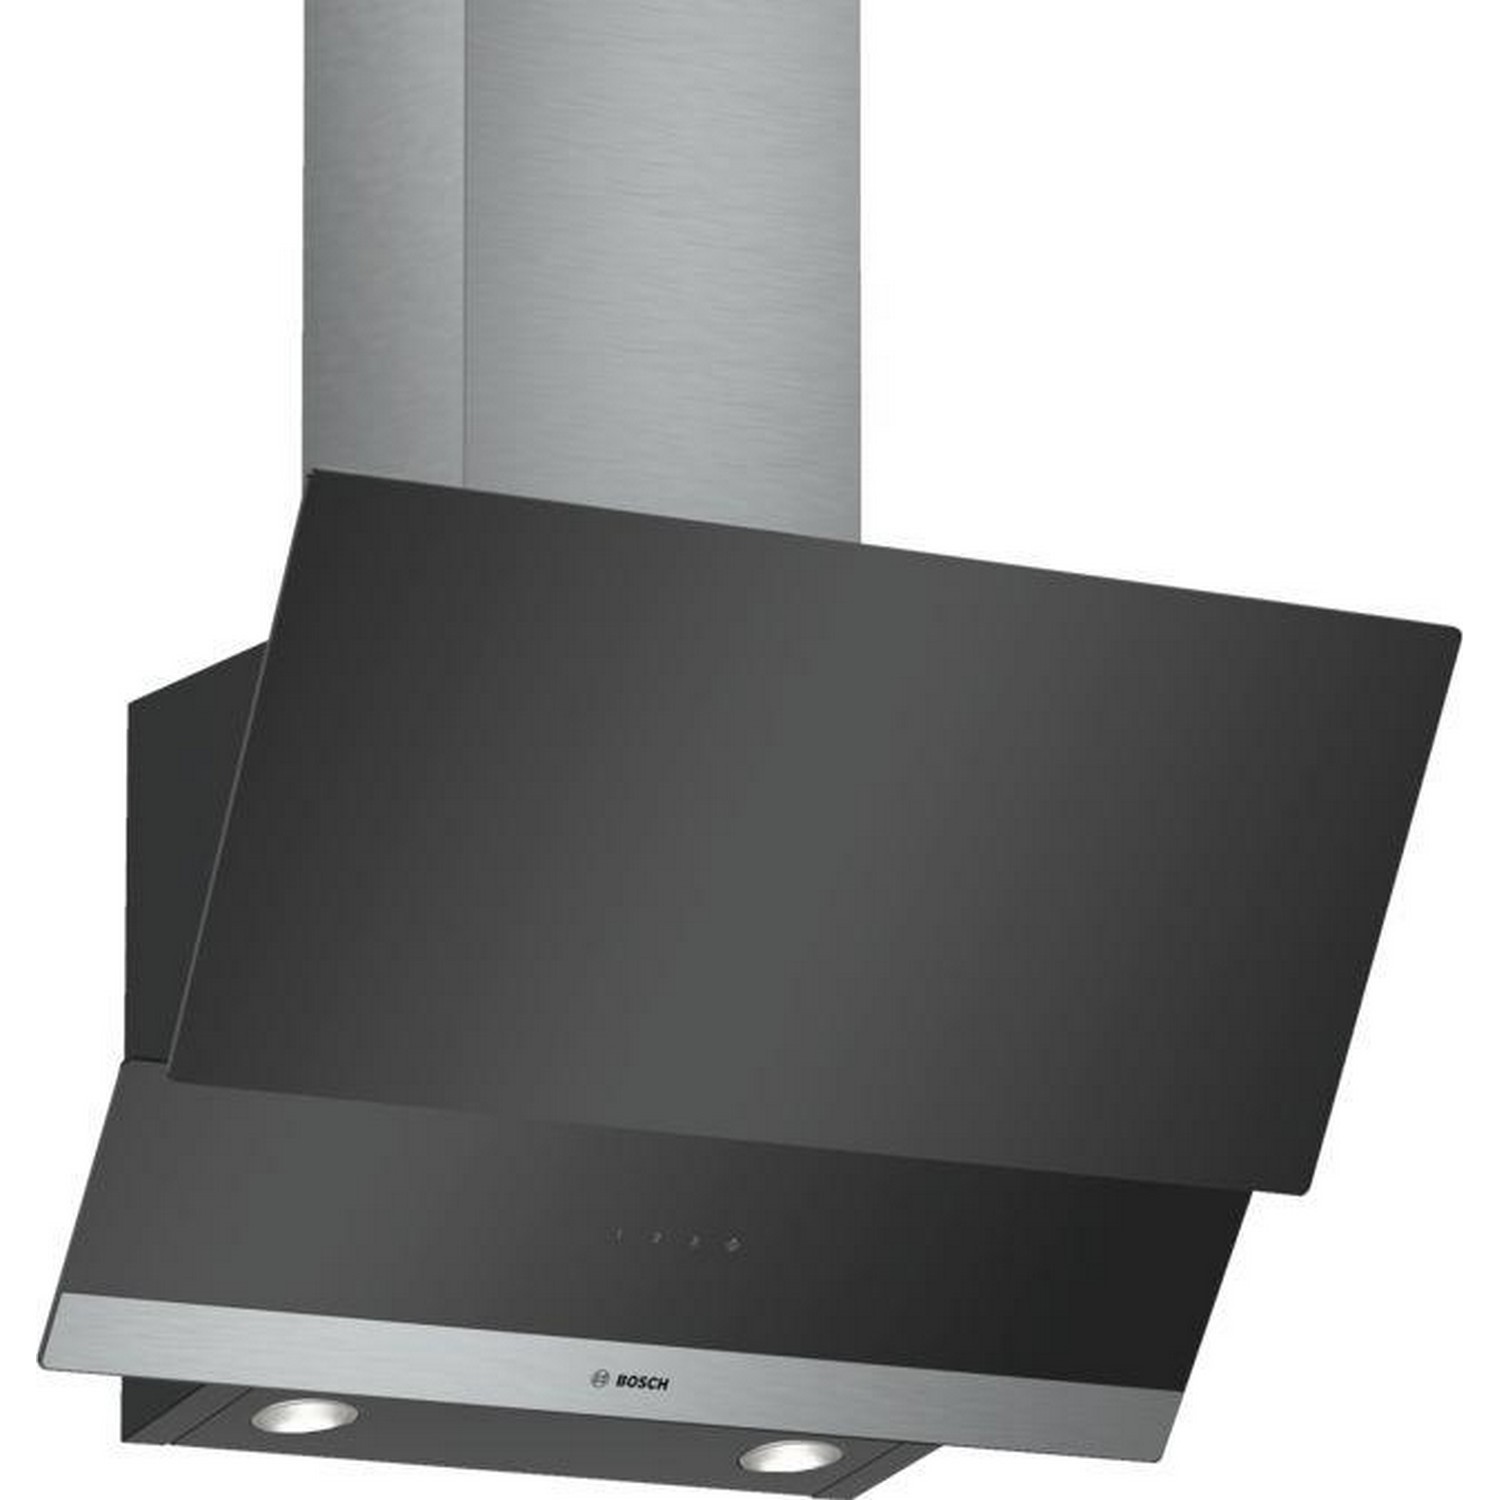 Характеристики кухонная вытяжка Bosch DWK065G60R